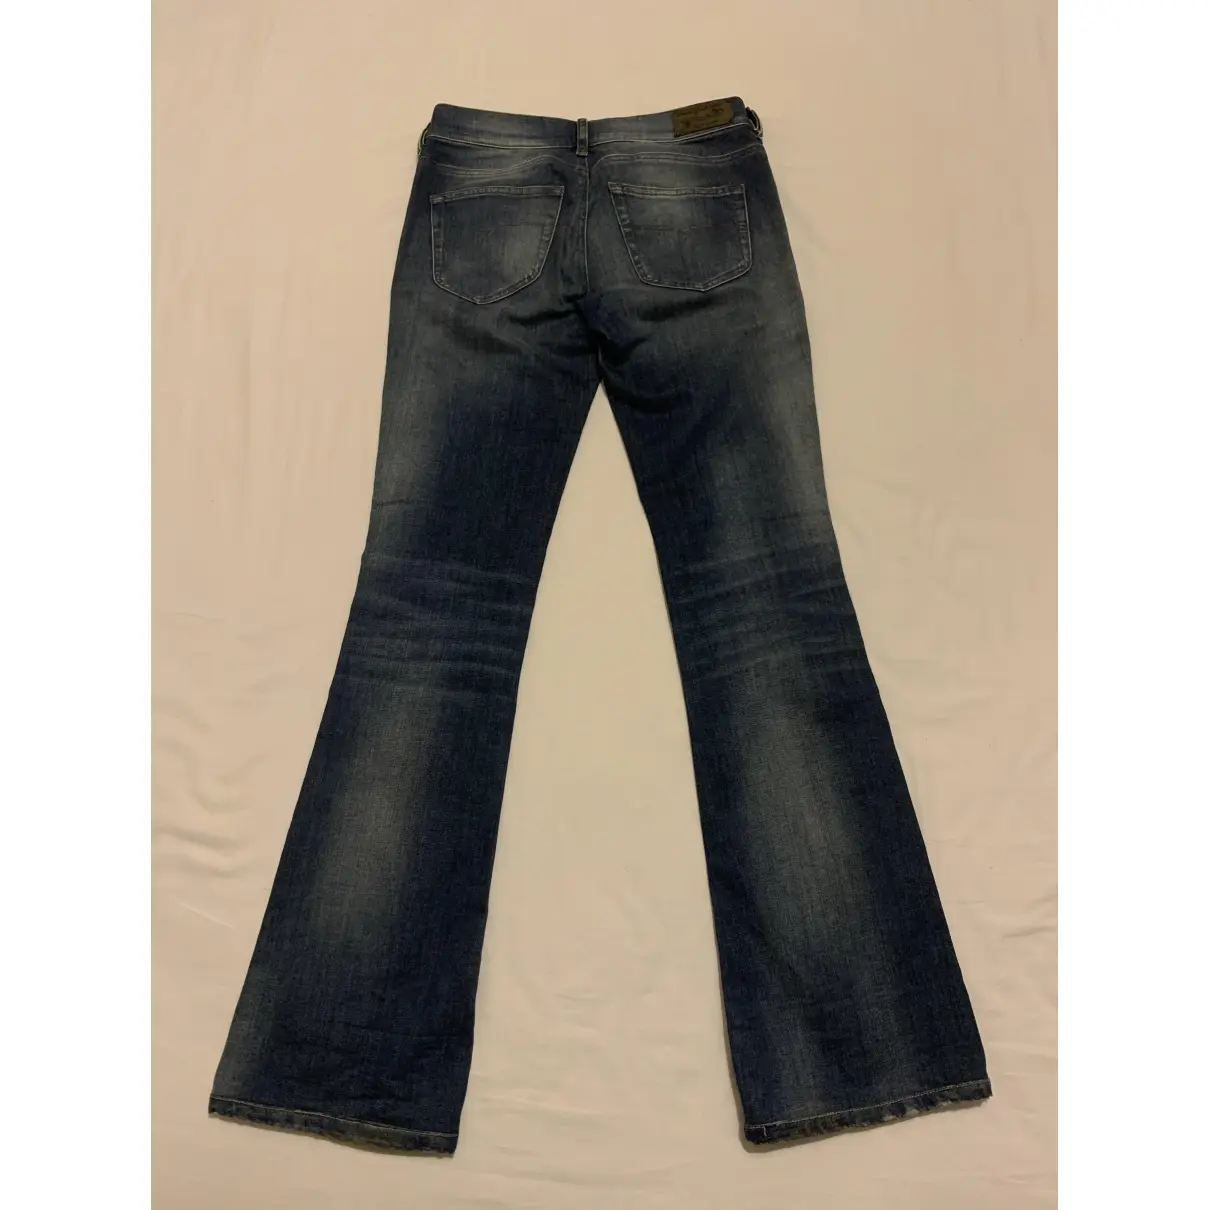 Buy Diesel Blue Cotton - elasthane Jeans online